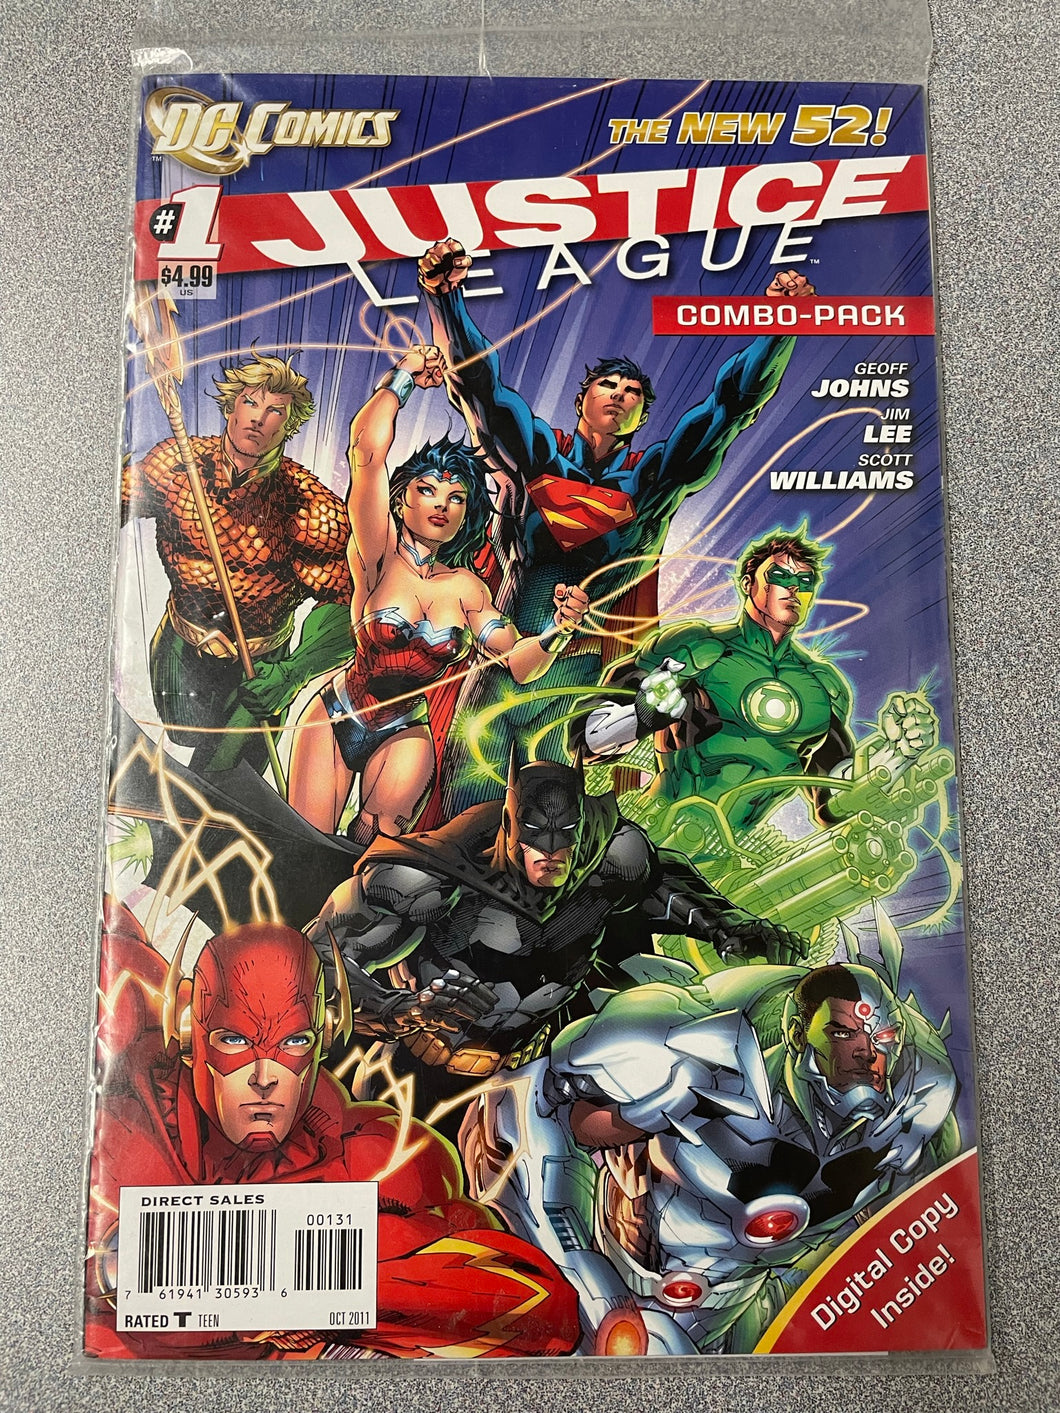 DC Comics The New 52! Justice League Combo-Pack #1, Johns, Geoff, et al, [Oct 2011] GN 1/23